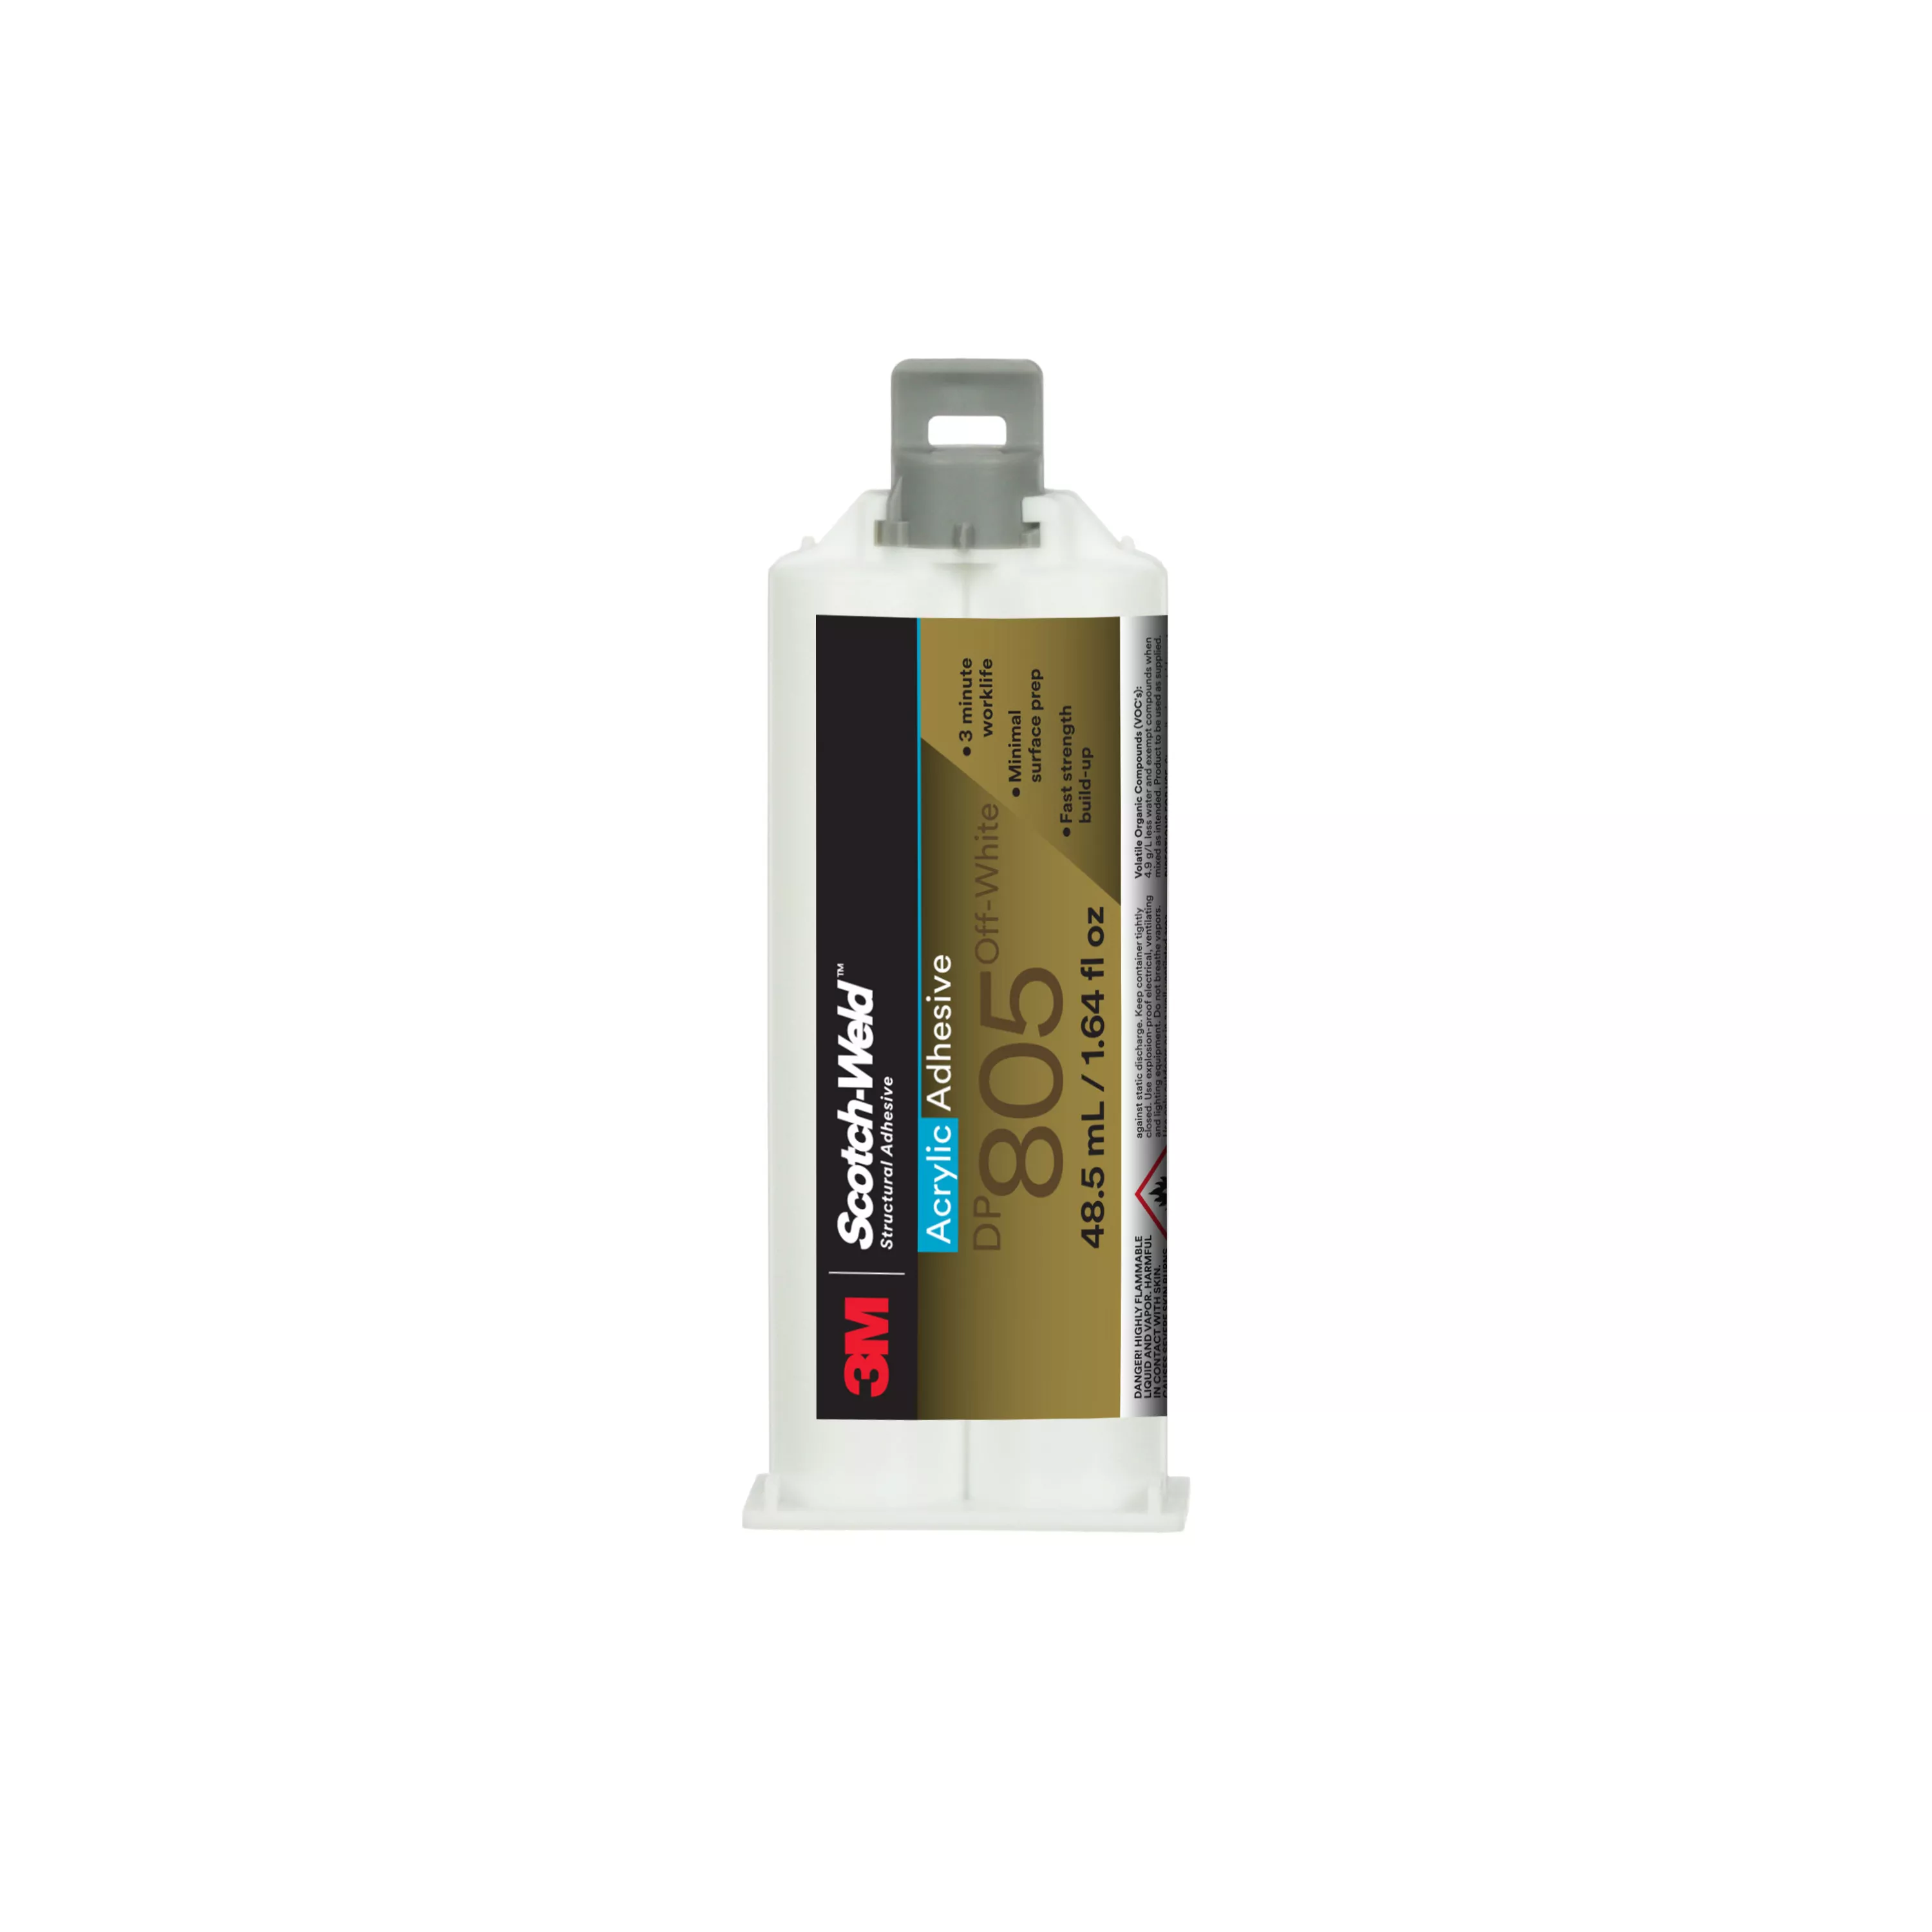 3M™ Scotch-Weld™ Acrylic Adhesive DP805, Off-White, 48.5 mL Duo-Pak,
12/Case